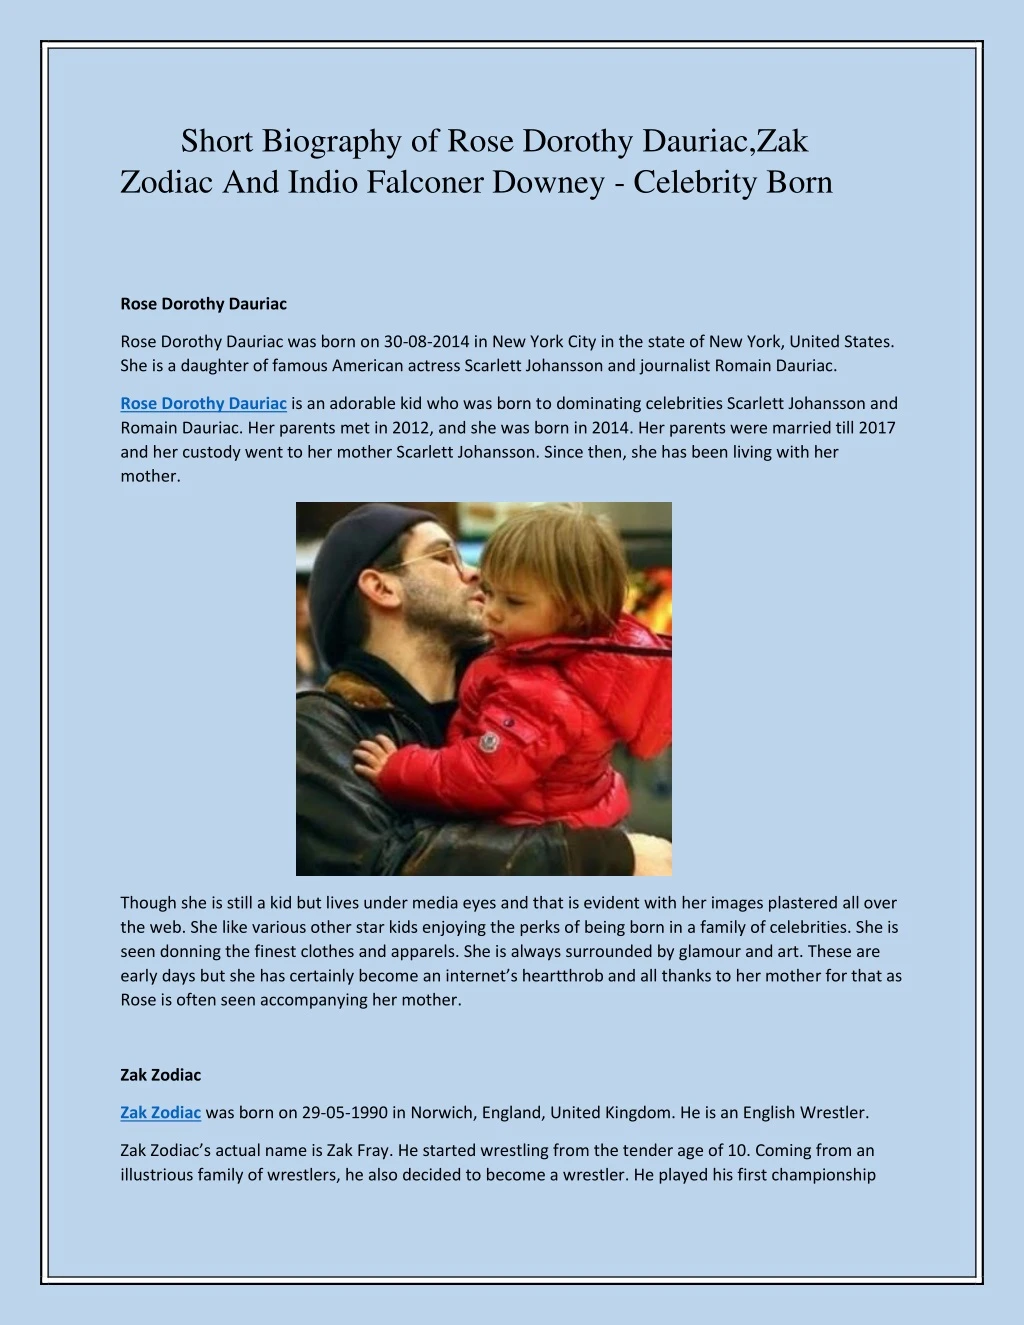 zodiac and indio falconer downey celebrity born